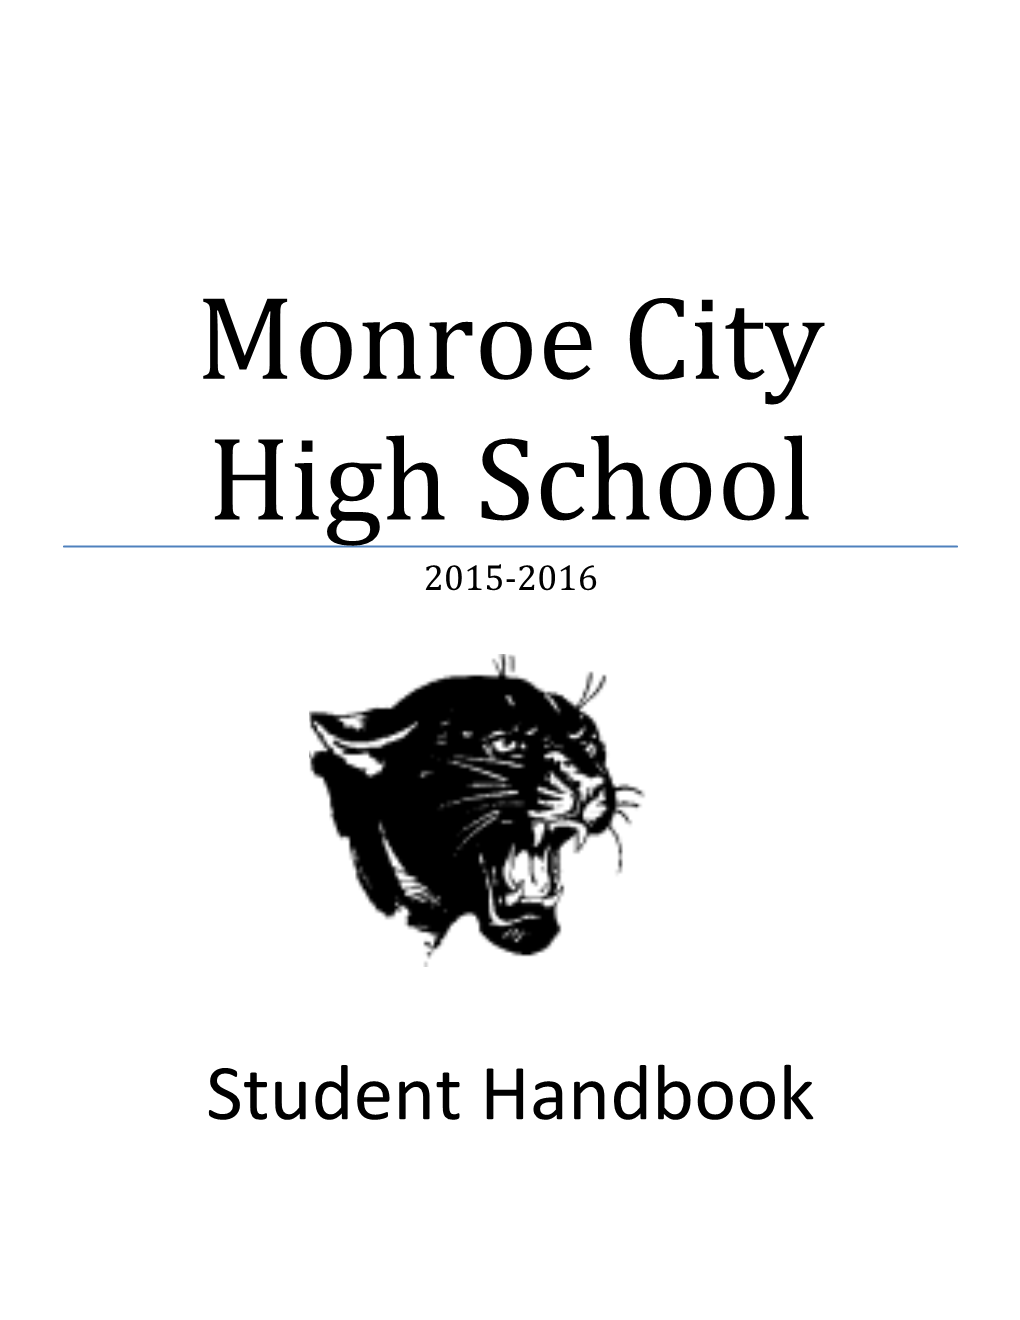 Monroe City High School